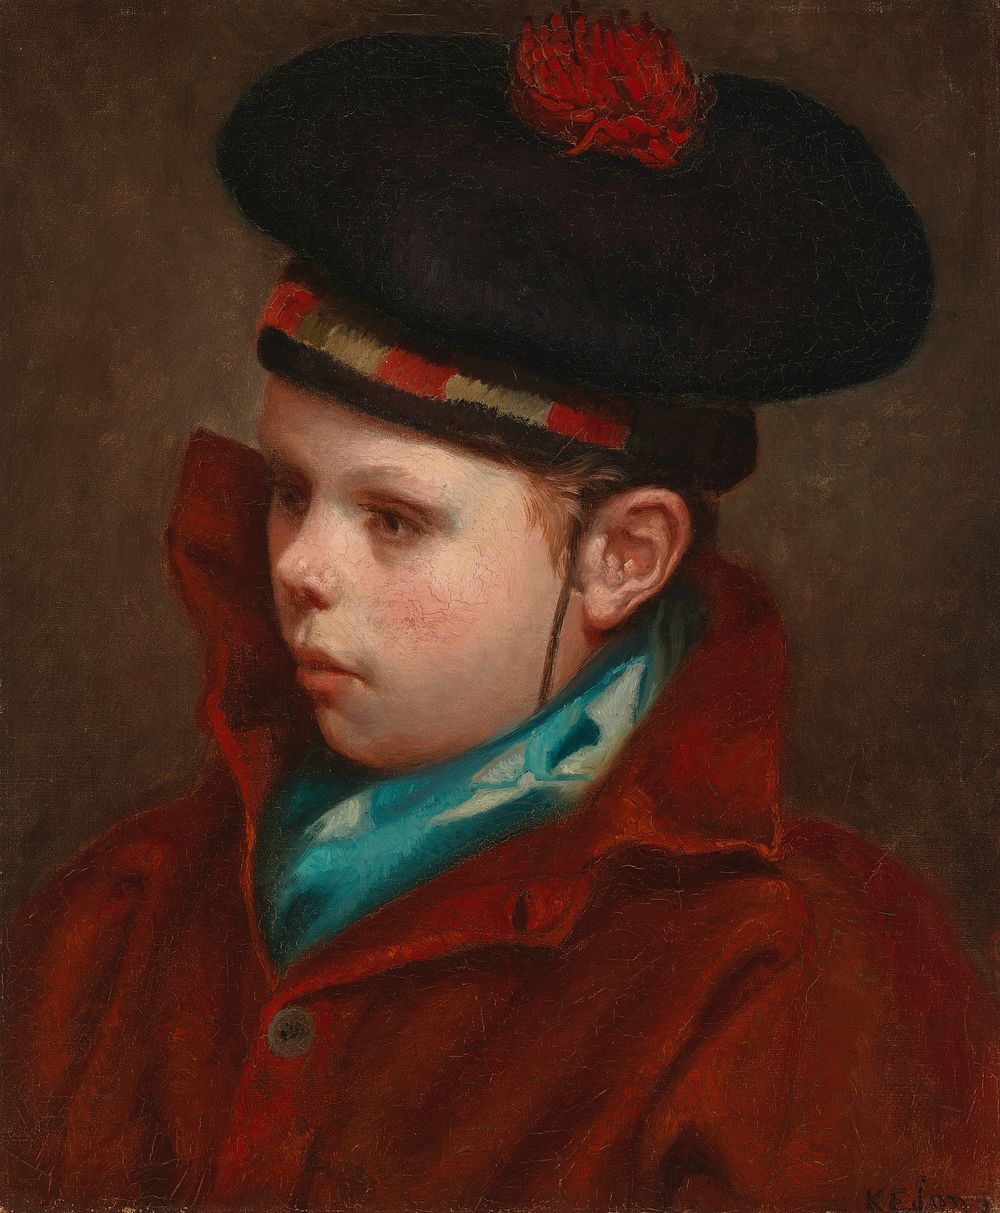 Sailor boy ii, 1866, Karl Emanuel Jansson